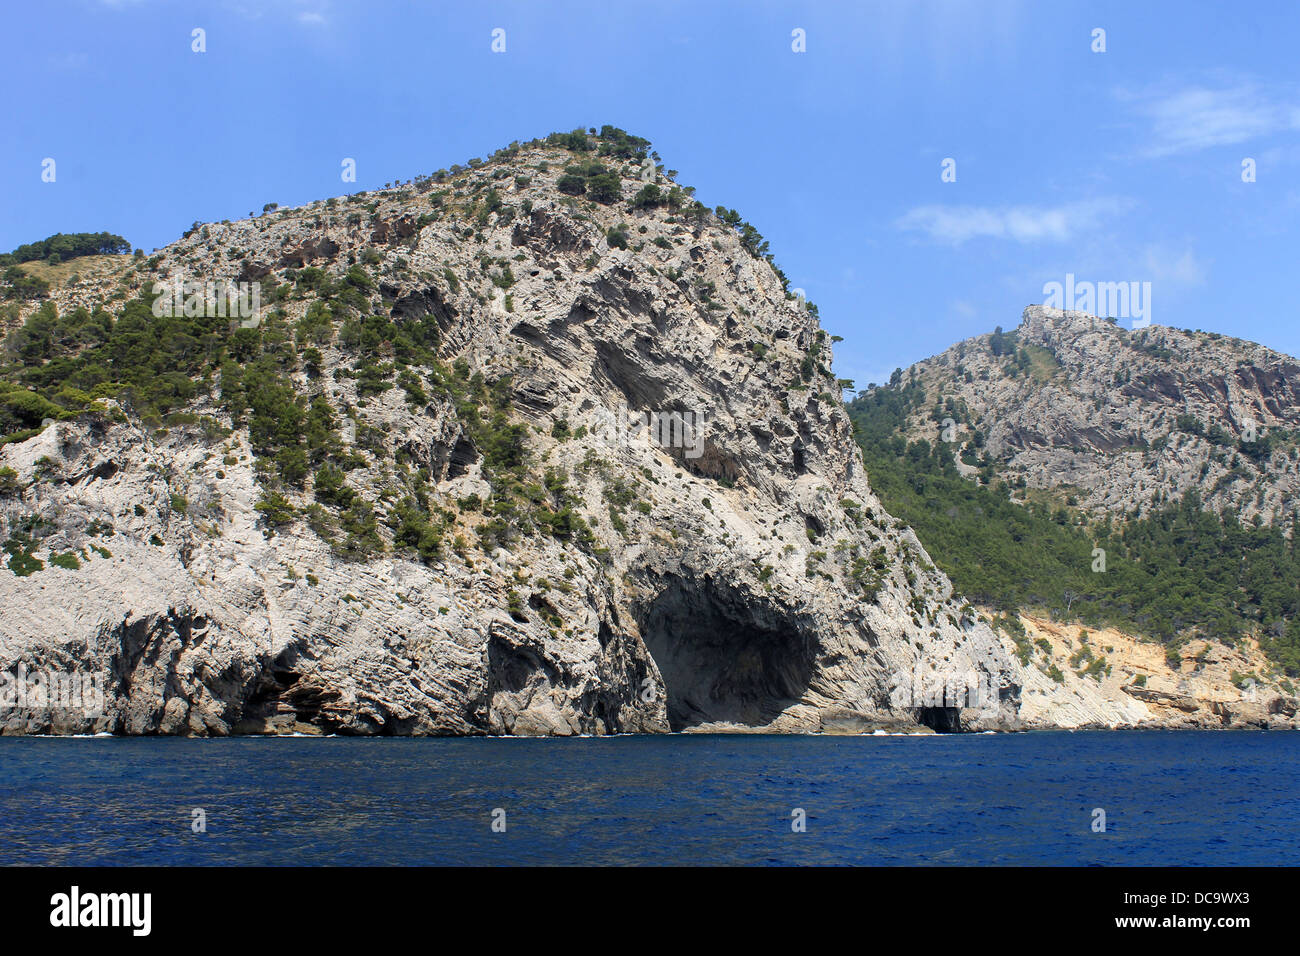 Sea cave on rocky coastline, Majorca, Balearic Islands, Spain. Stock Photo